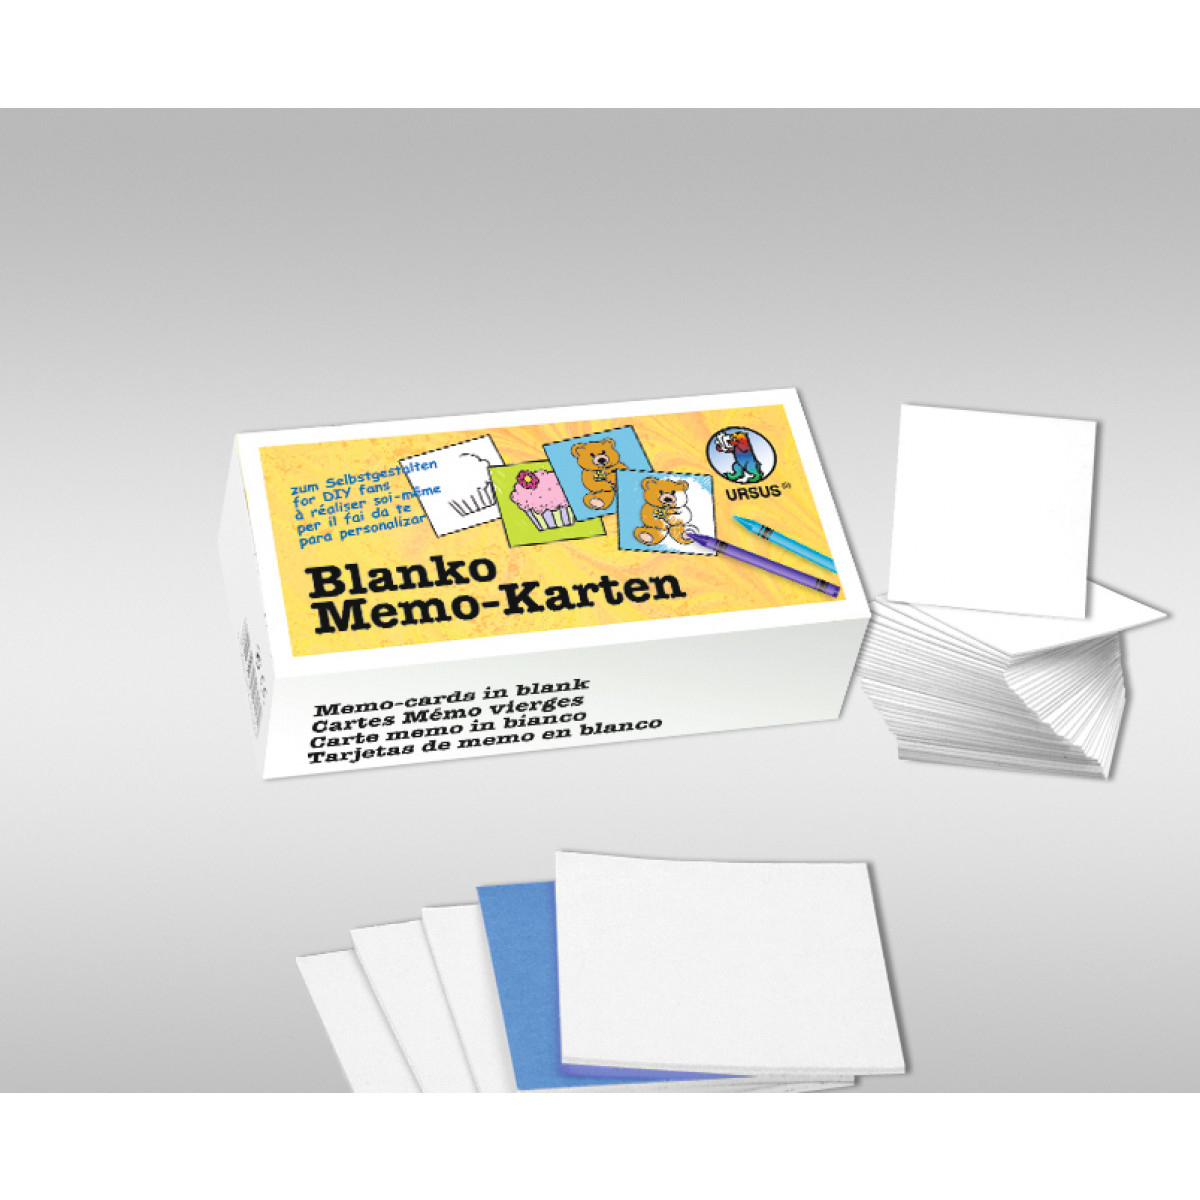 Blanko-Memo-Karten 6 X 6 Cm - 60 Teile bei Memokarten